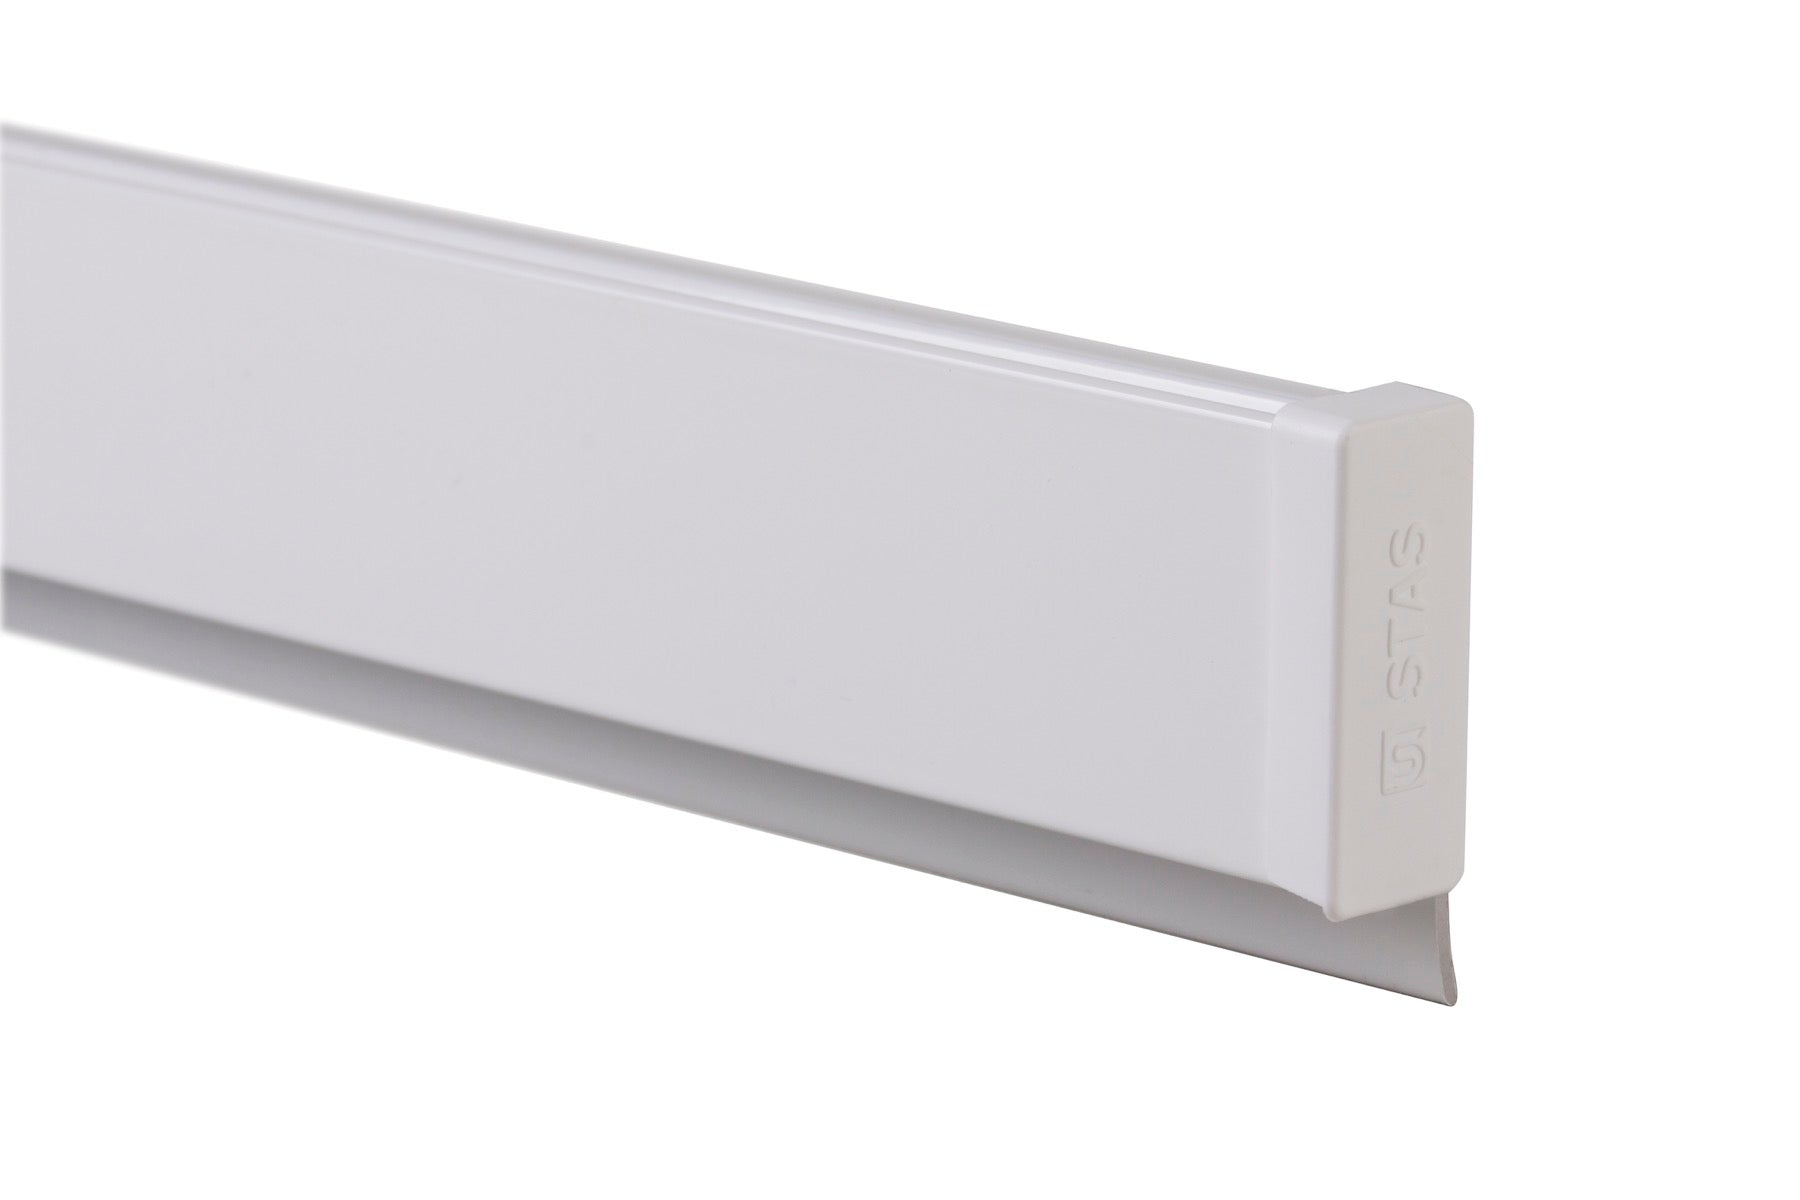 Papergrip rail: POW15 - Papergrip rail, 1.5m white